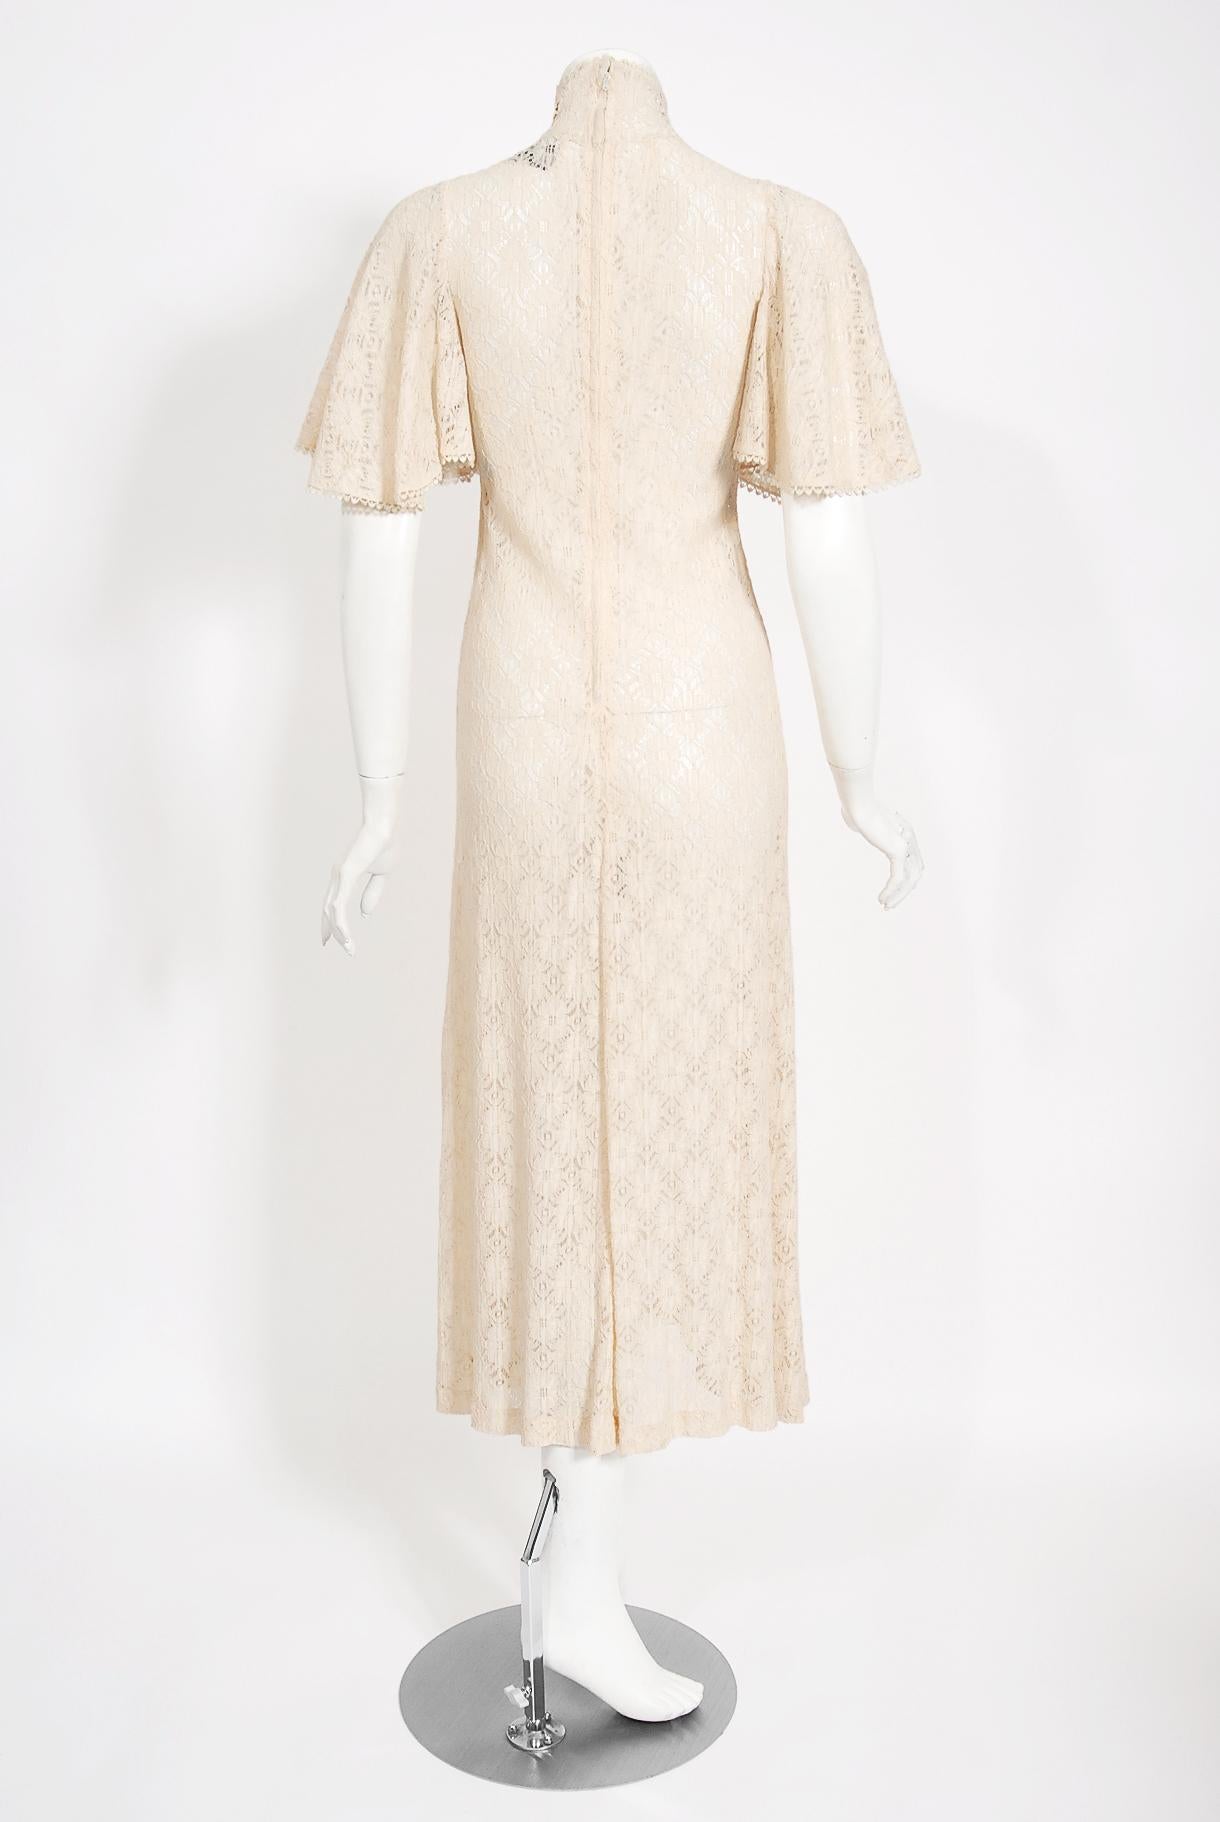 Vintage 1969 Biba Documented Cream Sheer Lace High-Neck Flutter Sleeve Tea Dress 4